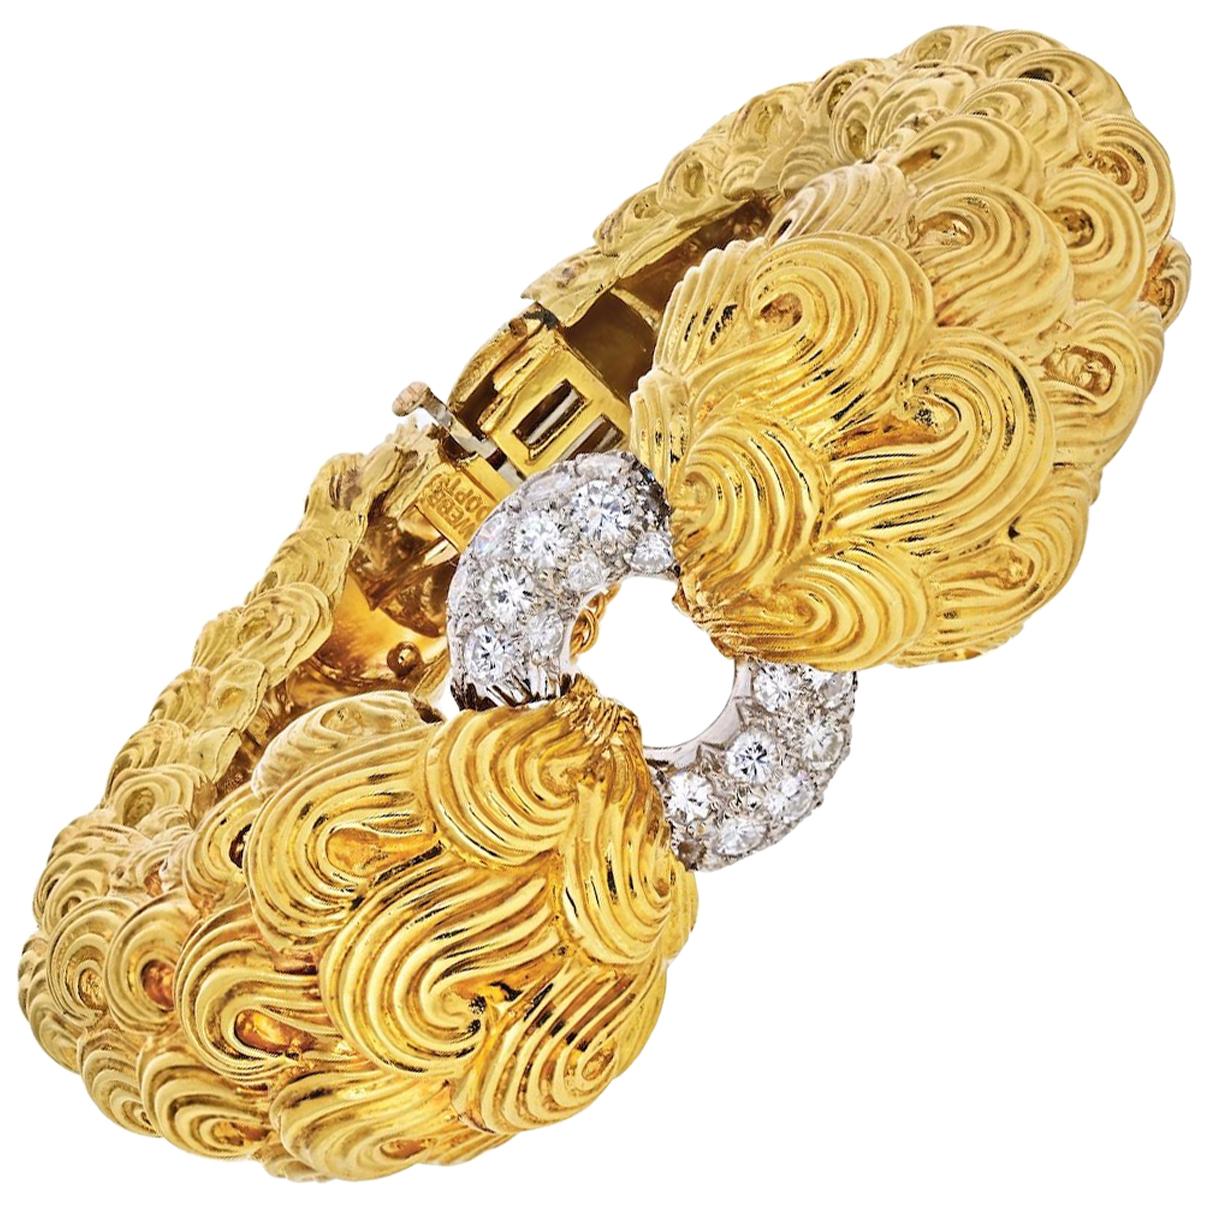 David Webb Platinum & 18K Yellow Gold Textured Scrolls, and Diamond Bracelet